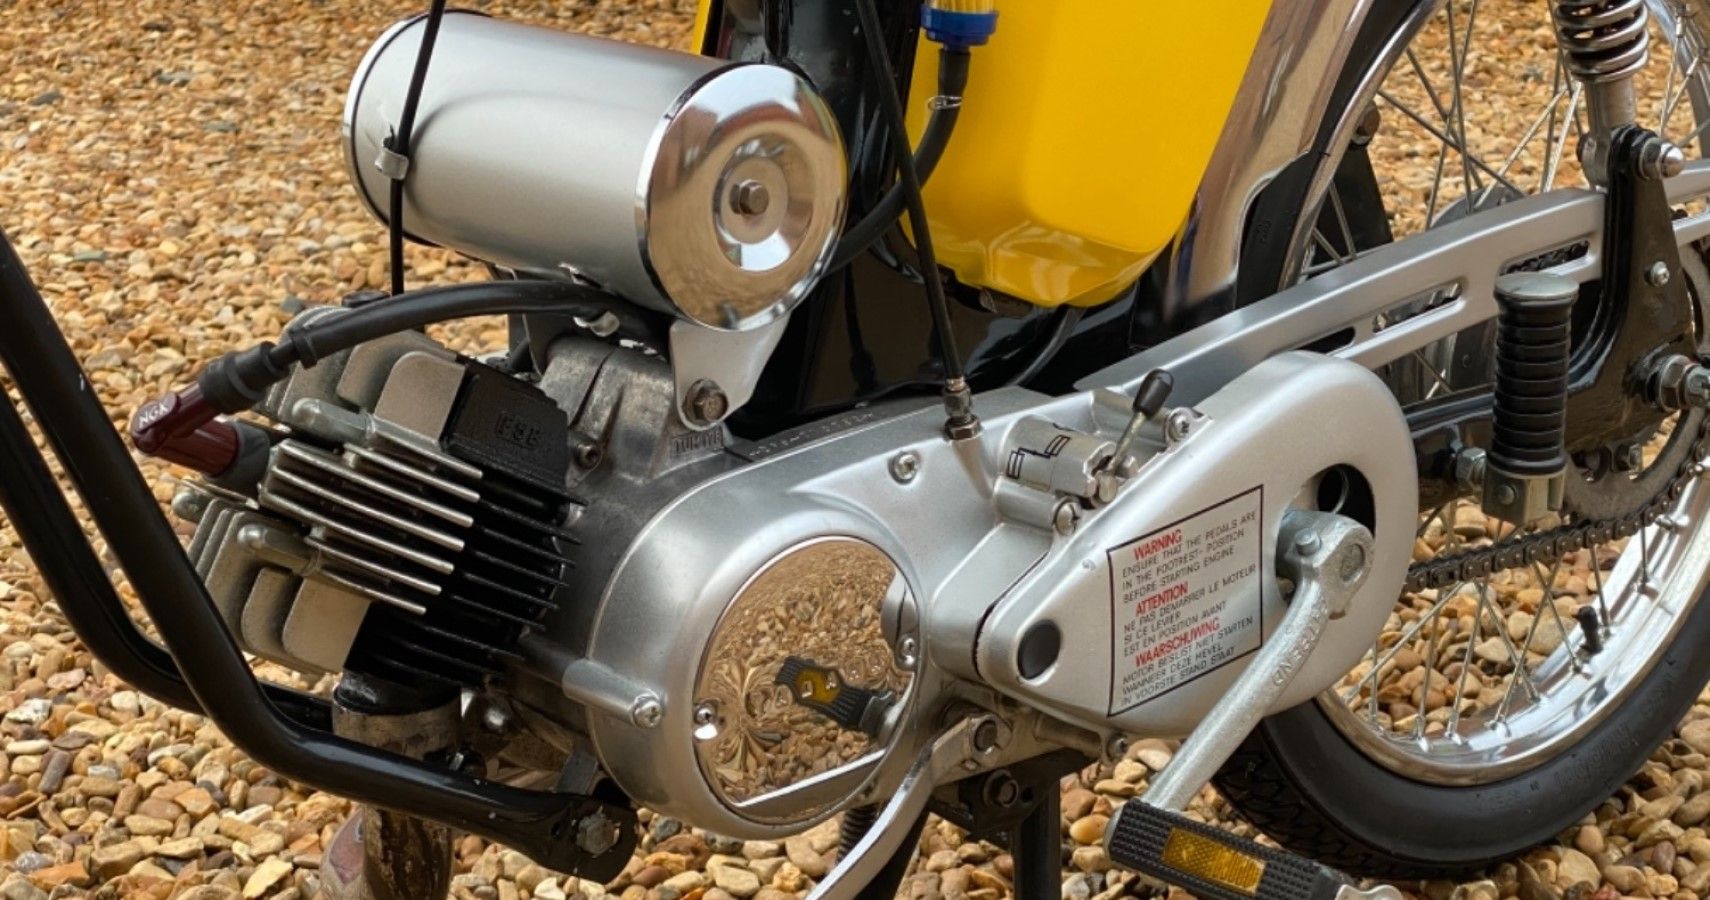 Yamaha FS1-E engine close-up view